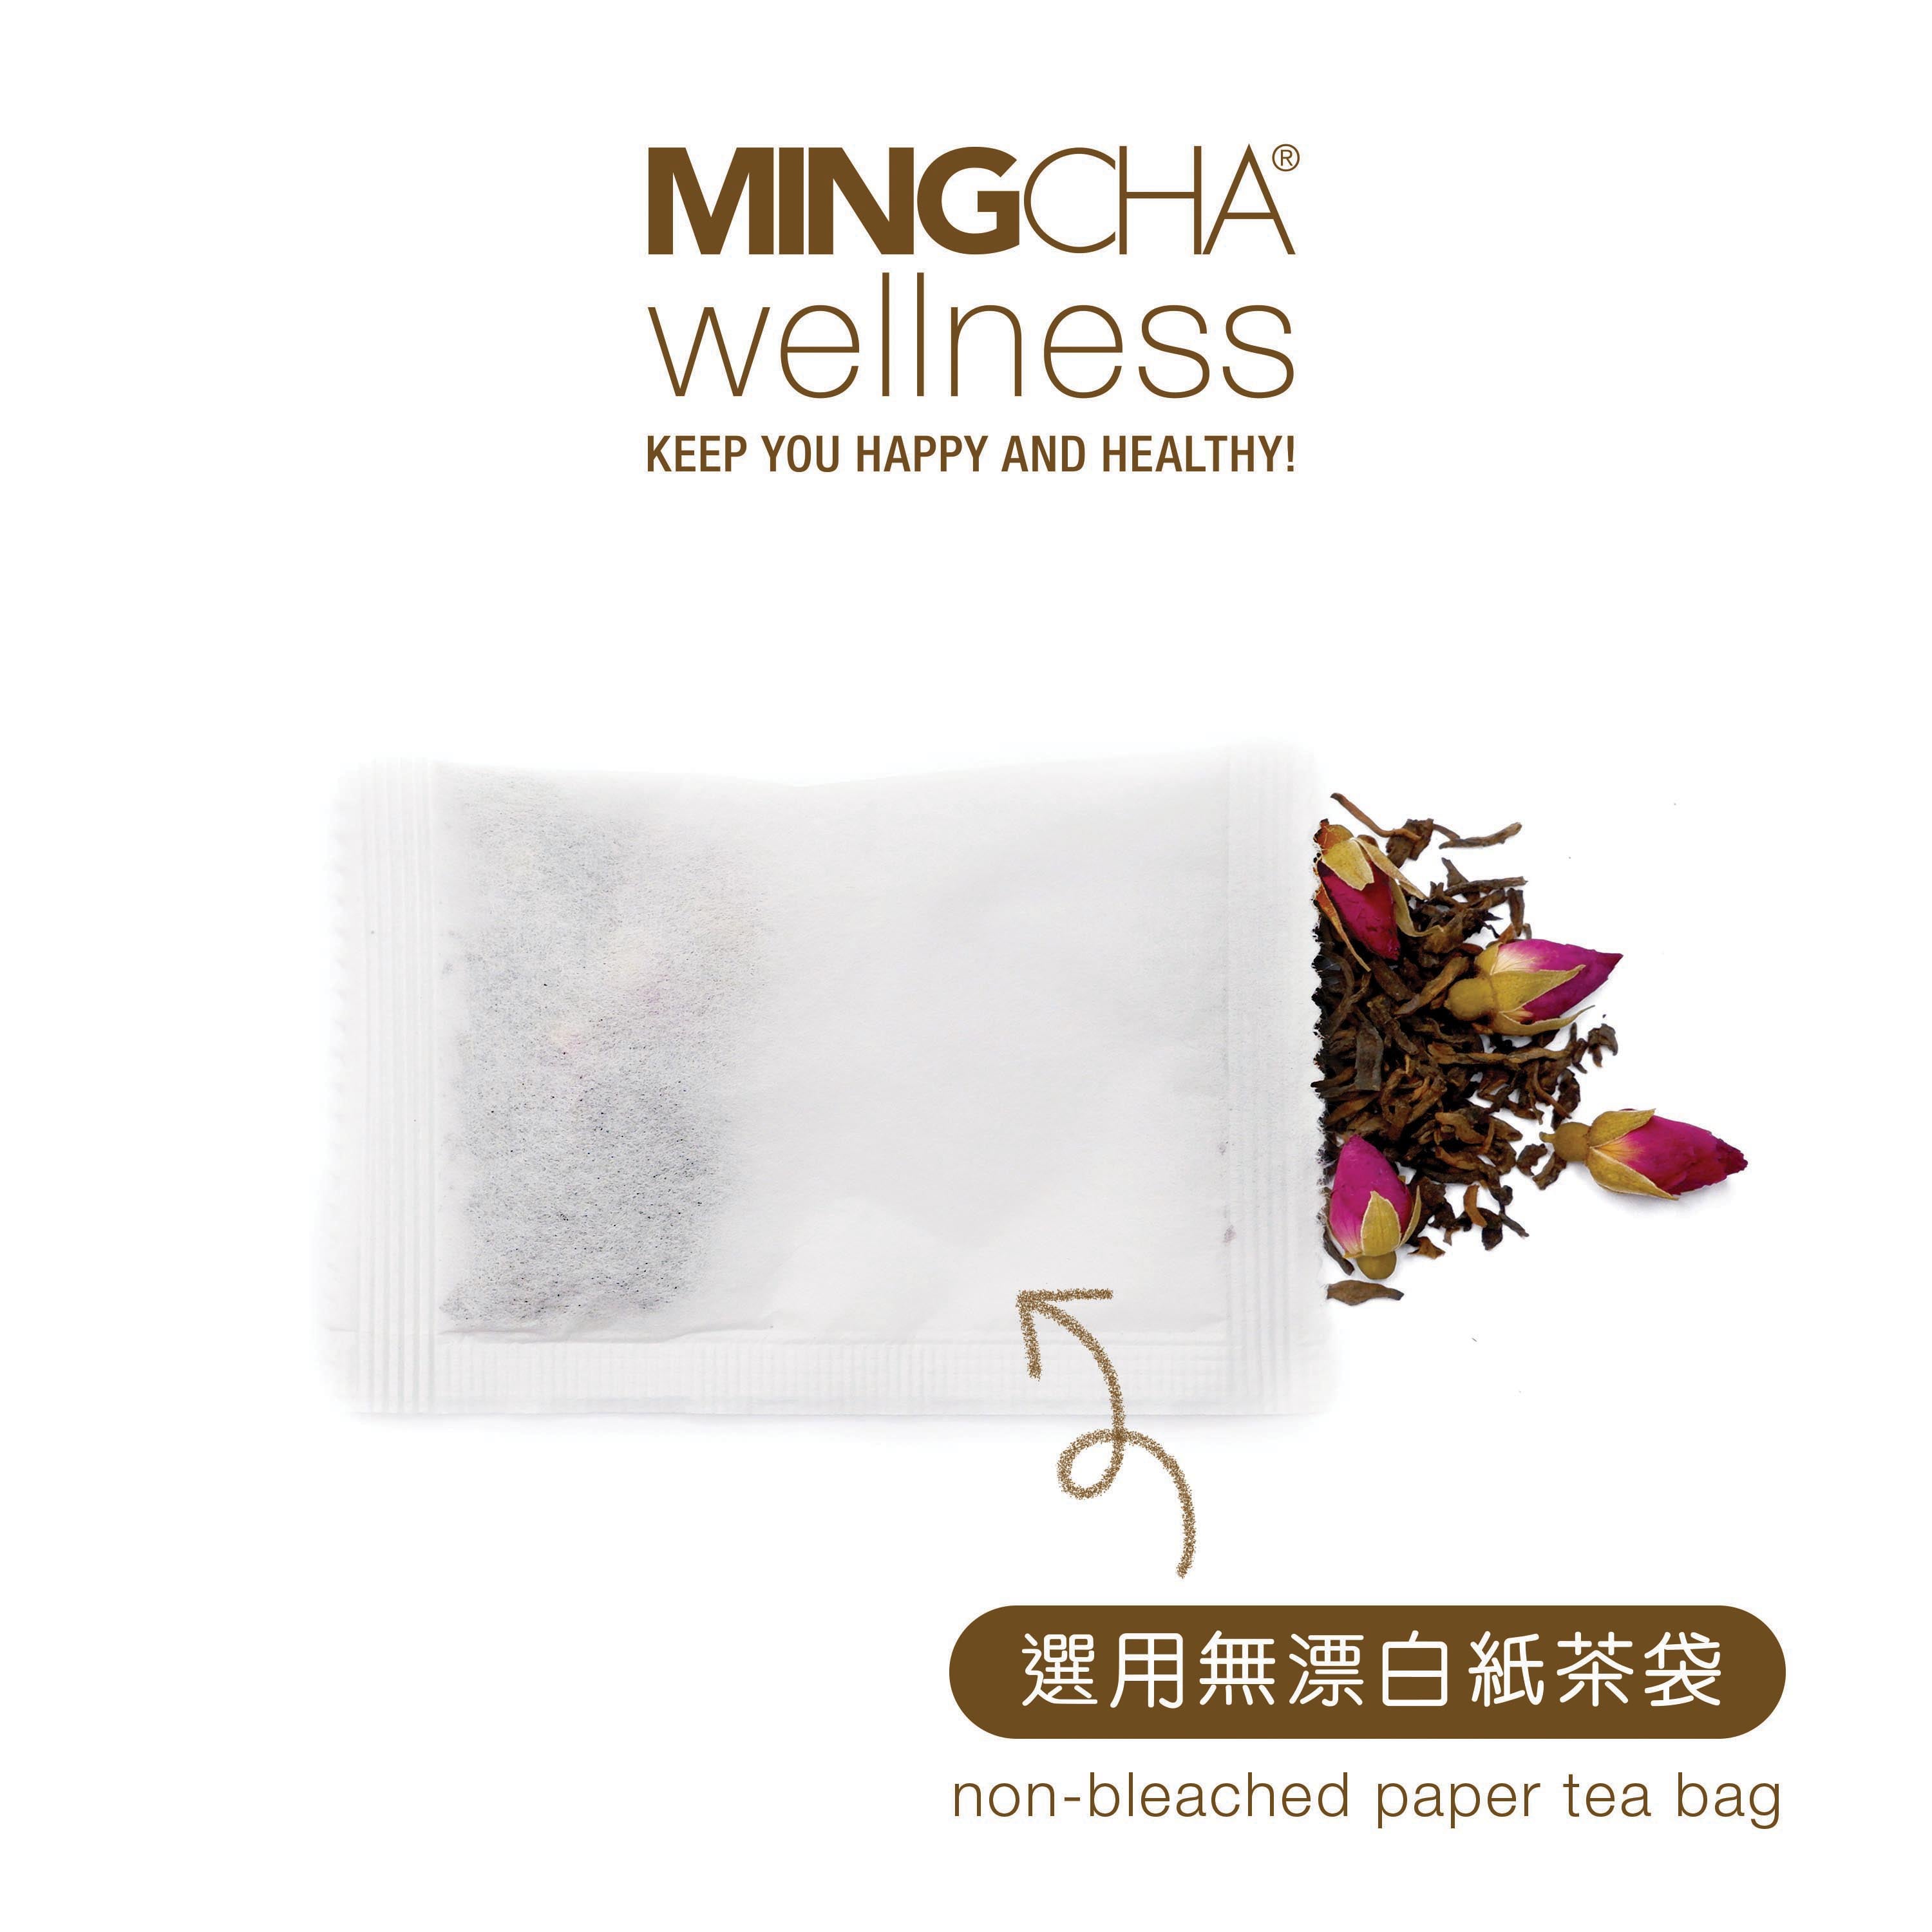 MingCha Wellness, Poop Poop Tea